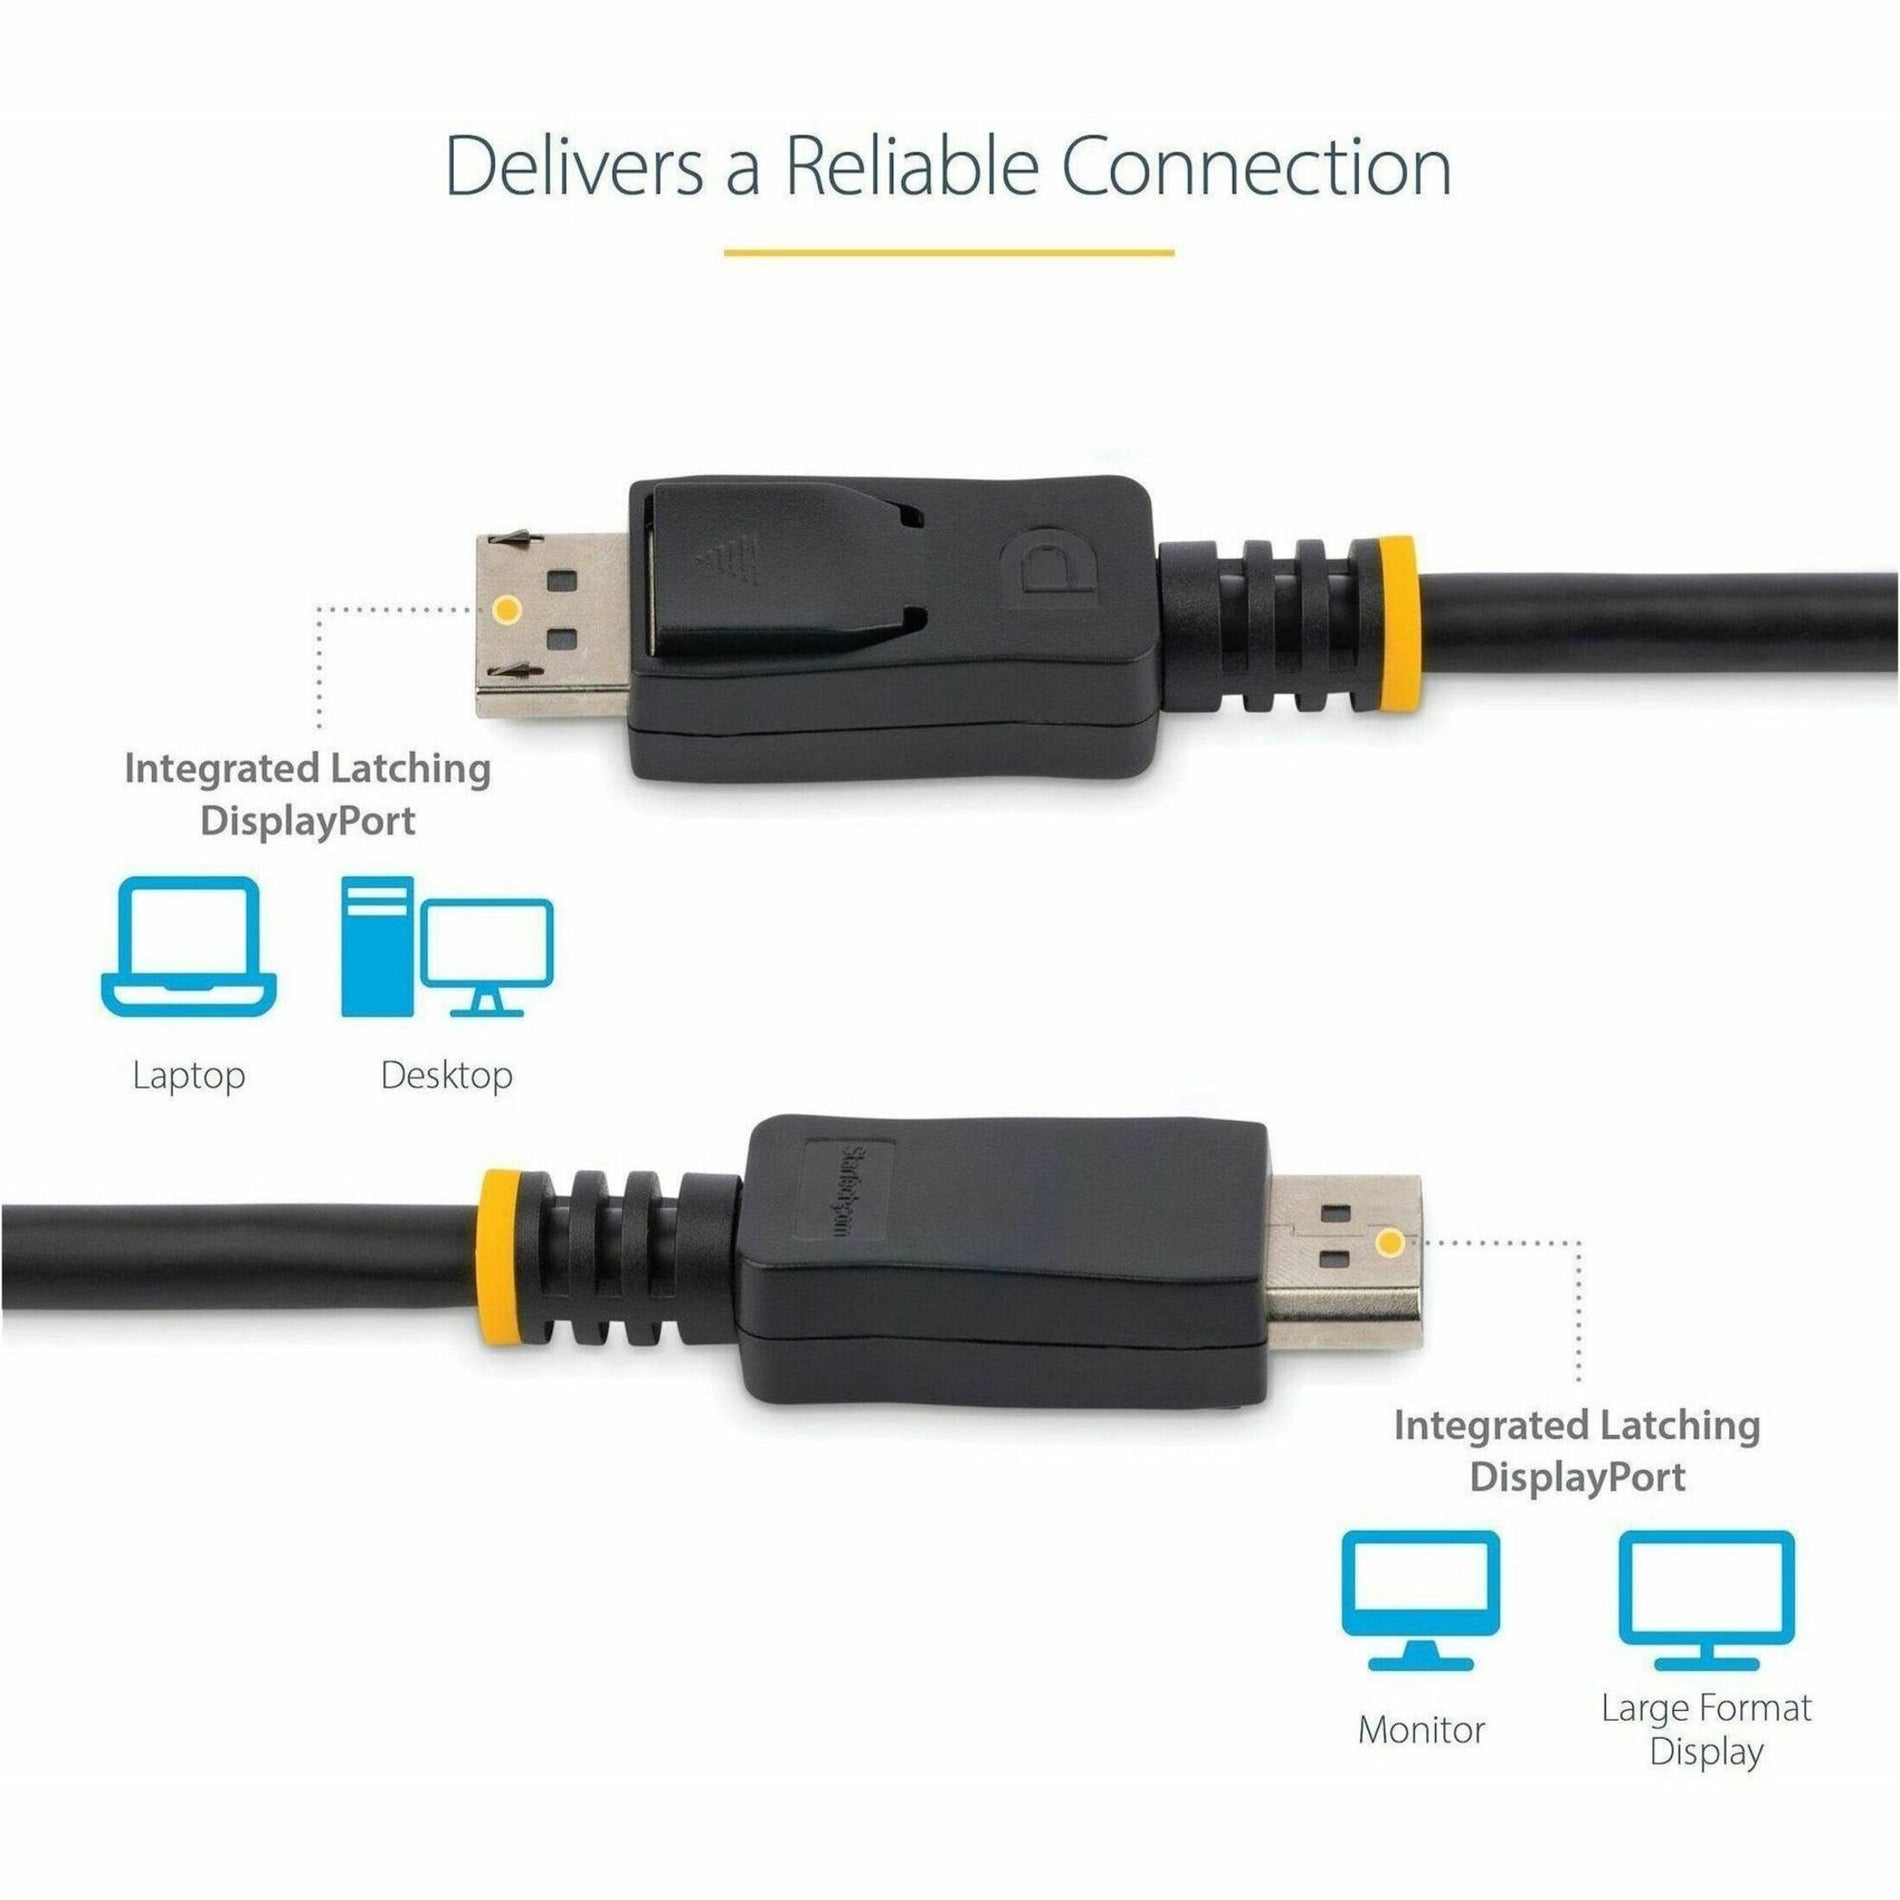 StarTech.com -> StarTech.com DISPLPORT1L -> Cable DisplayPort 1 ft 1 ft -> 1 pie Short -> Corto DisplayPort 1.2 Cable with Latches M/M -> Cable DisplayPort 1.2 con trinquetes M/M 4k Video Cable -> Cable de video 4k